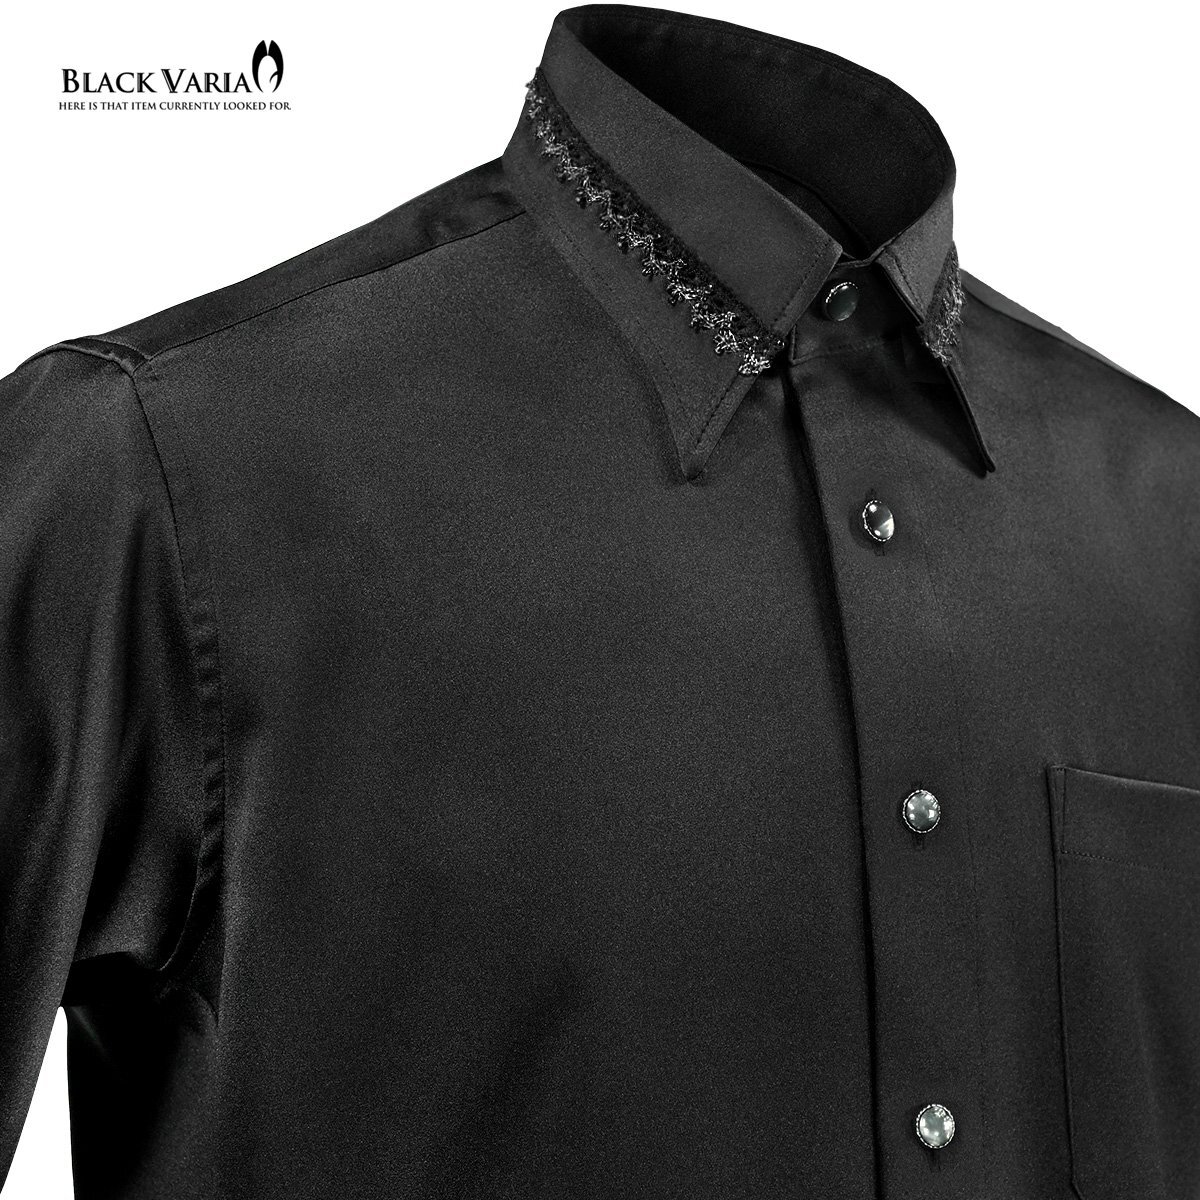 21170-2bk BlackVaria 襟レース ストーン風装飾ボタン ドレスシャツ パウダーサテン メンズ(ブラックレース黒シャツ) L パーティー 上品_画像7